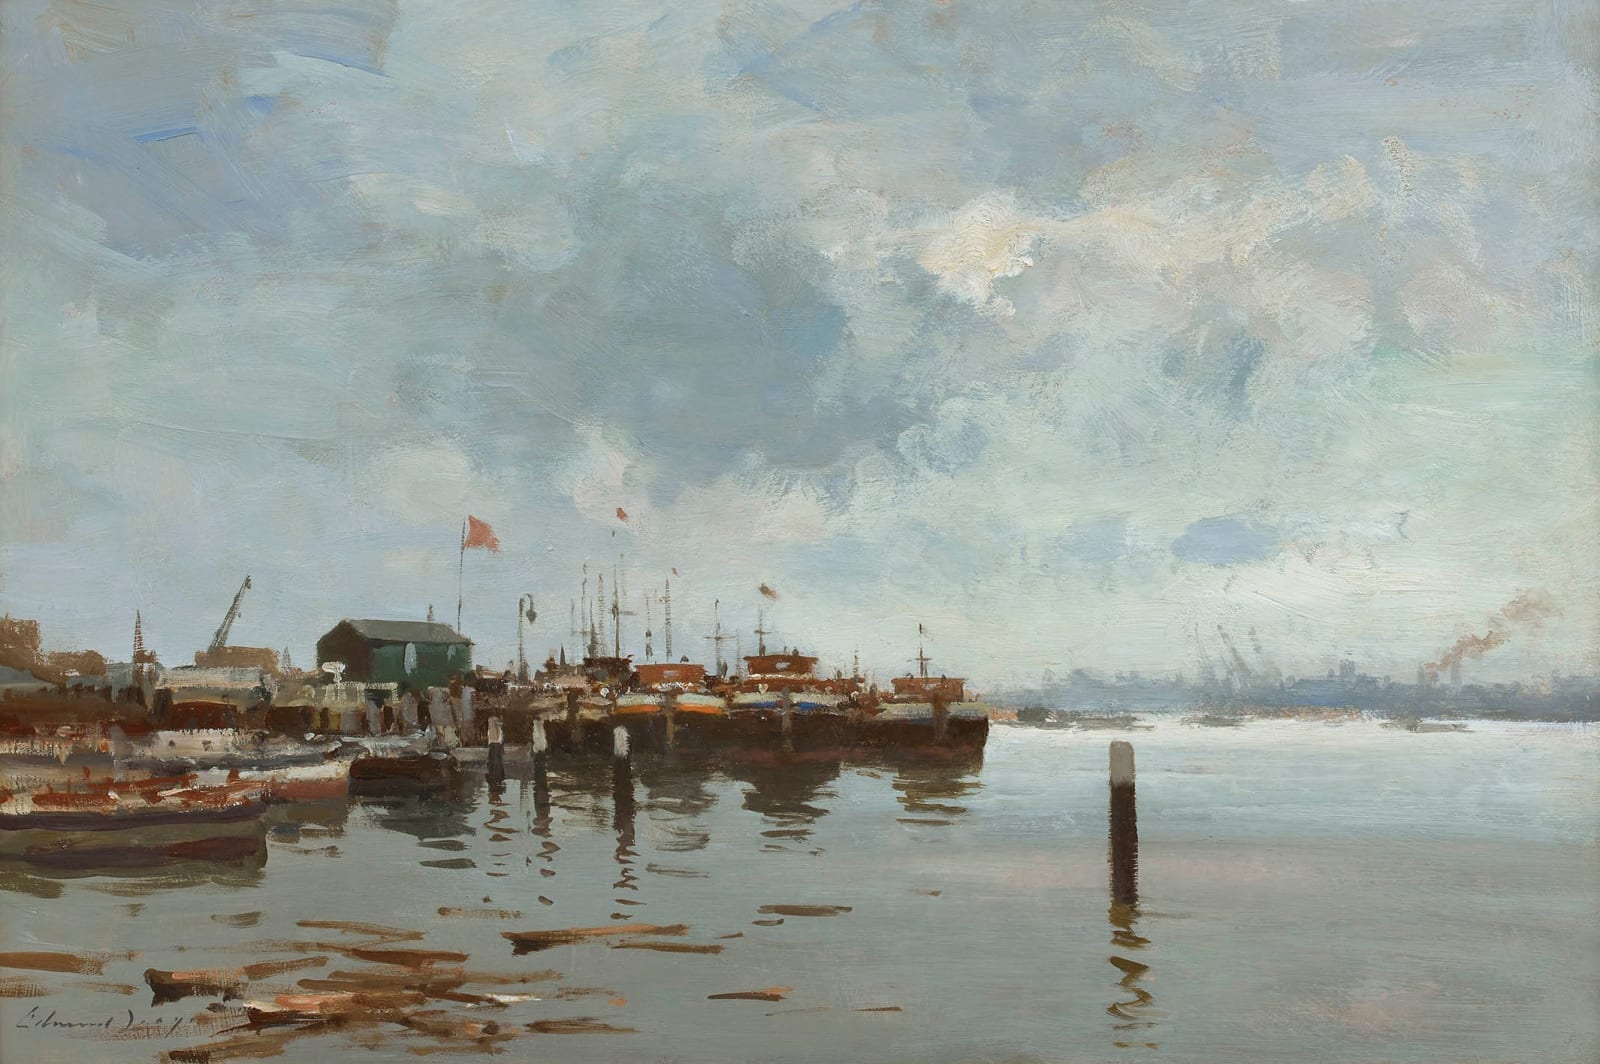 Edward Seago, 50. Barges at Anchor, Amsterdam